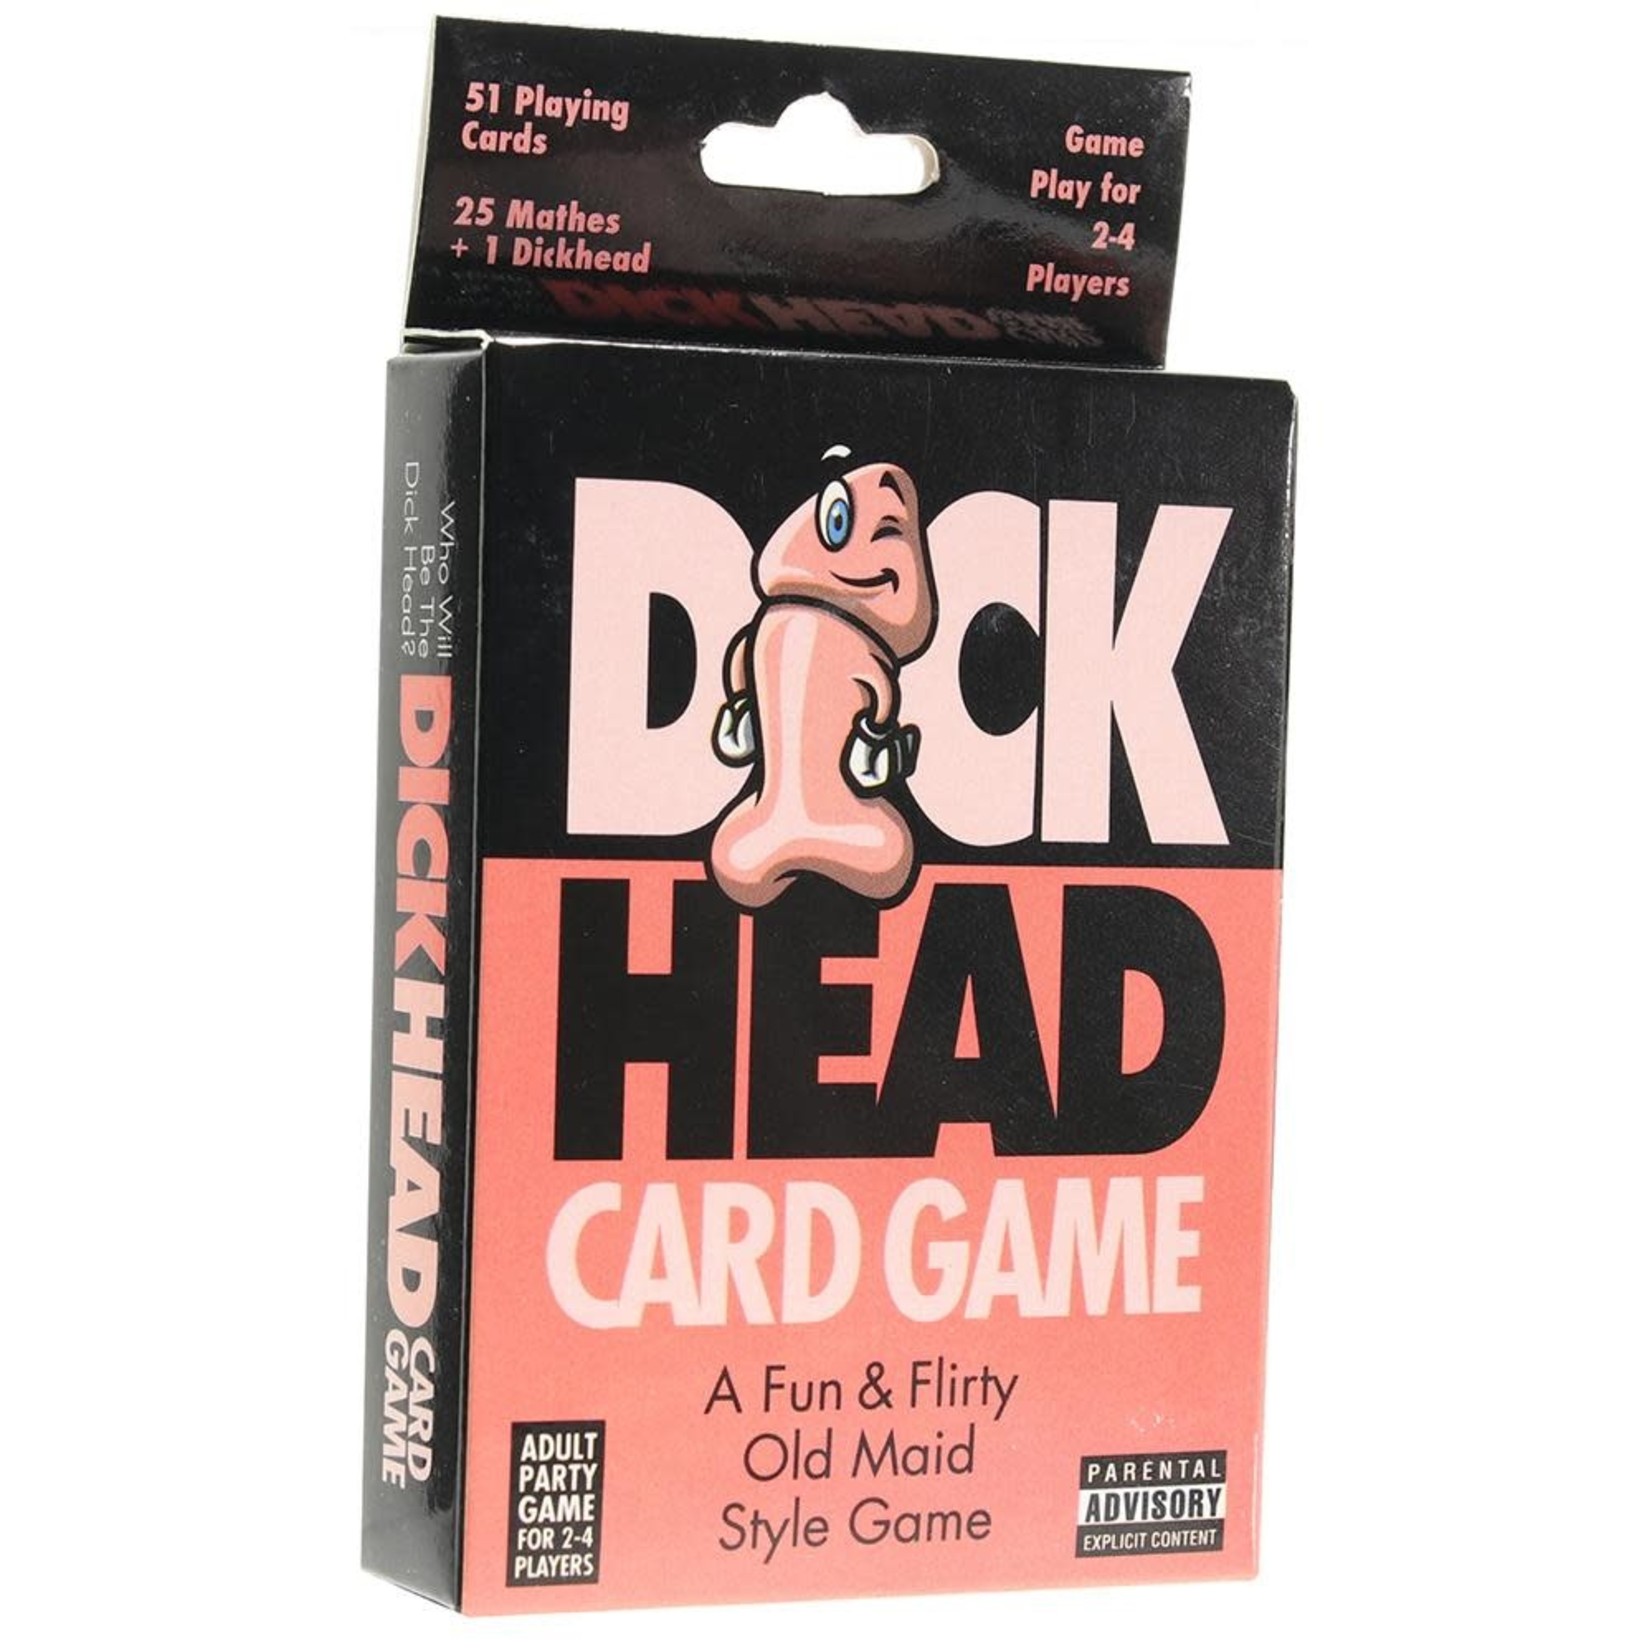 DICK HEAD CARD GAME